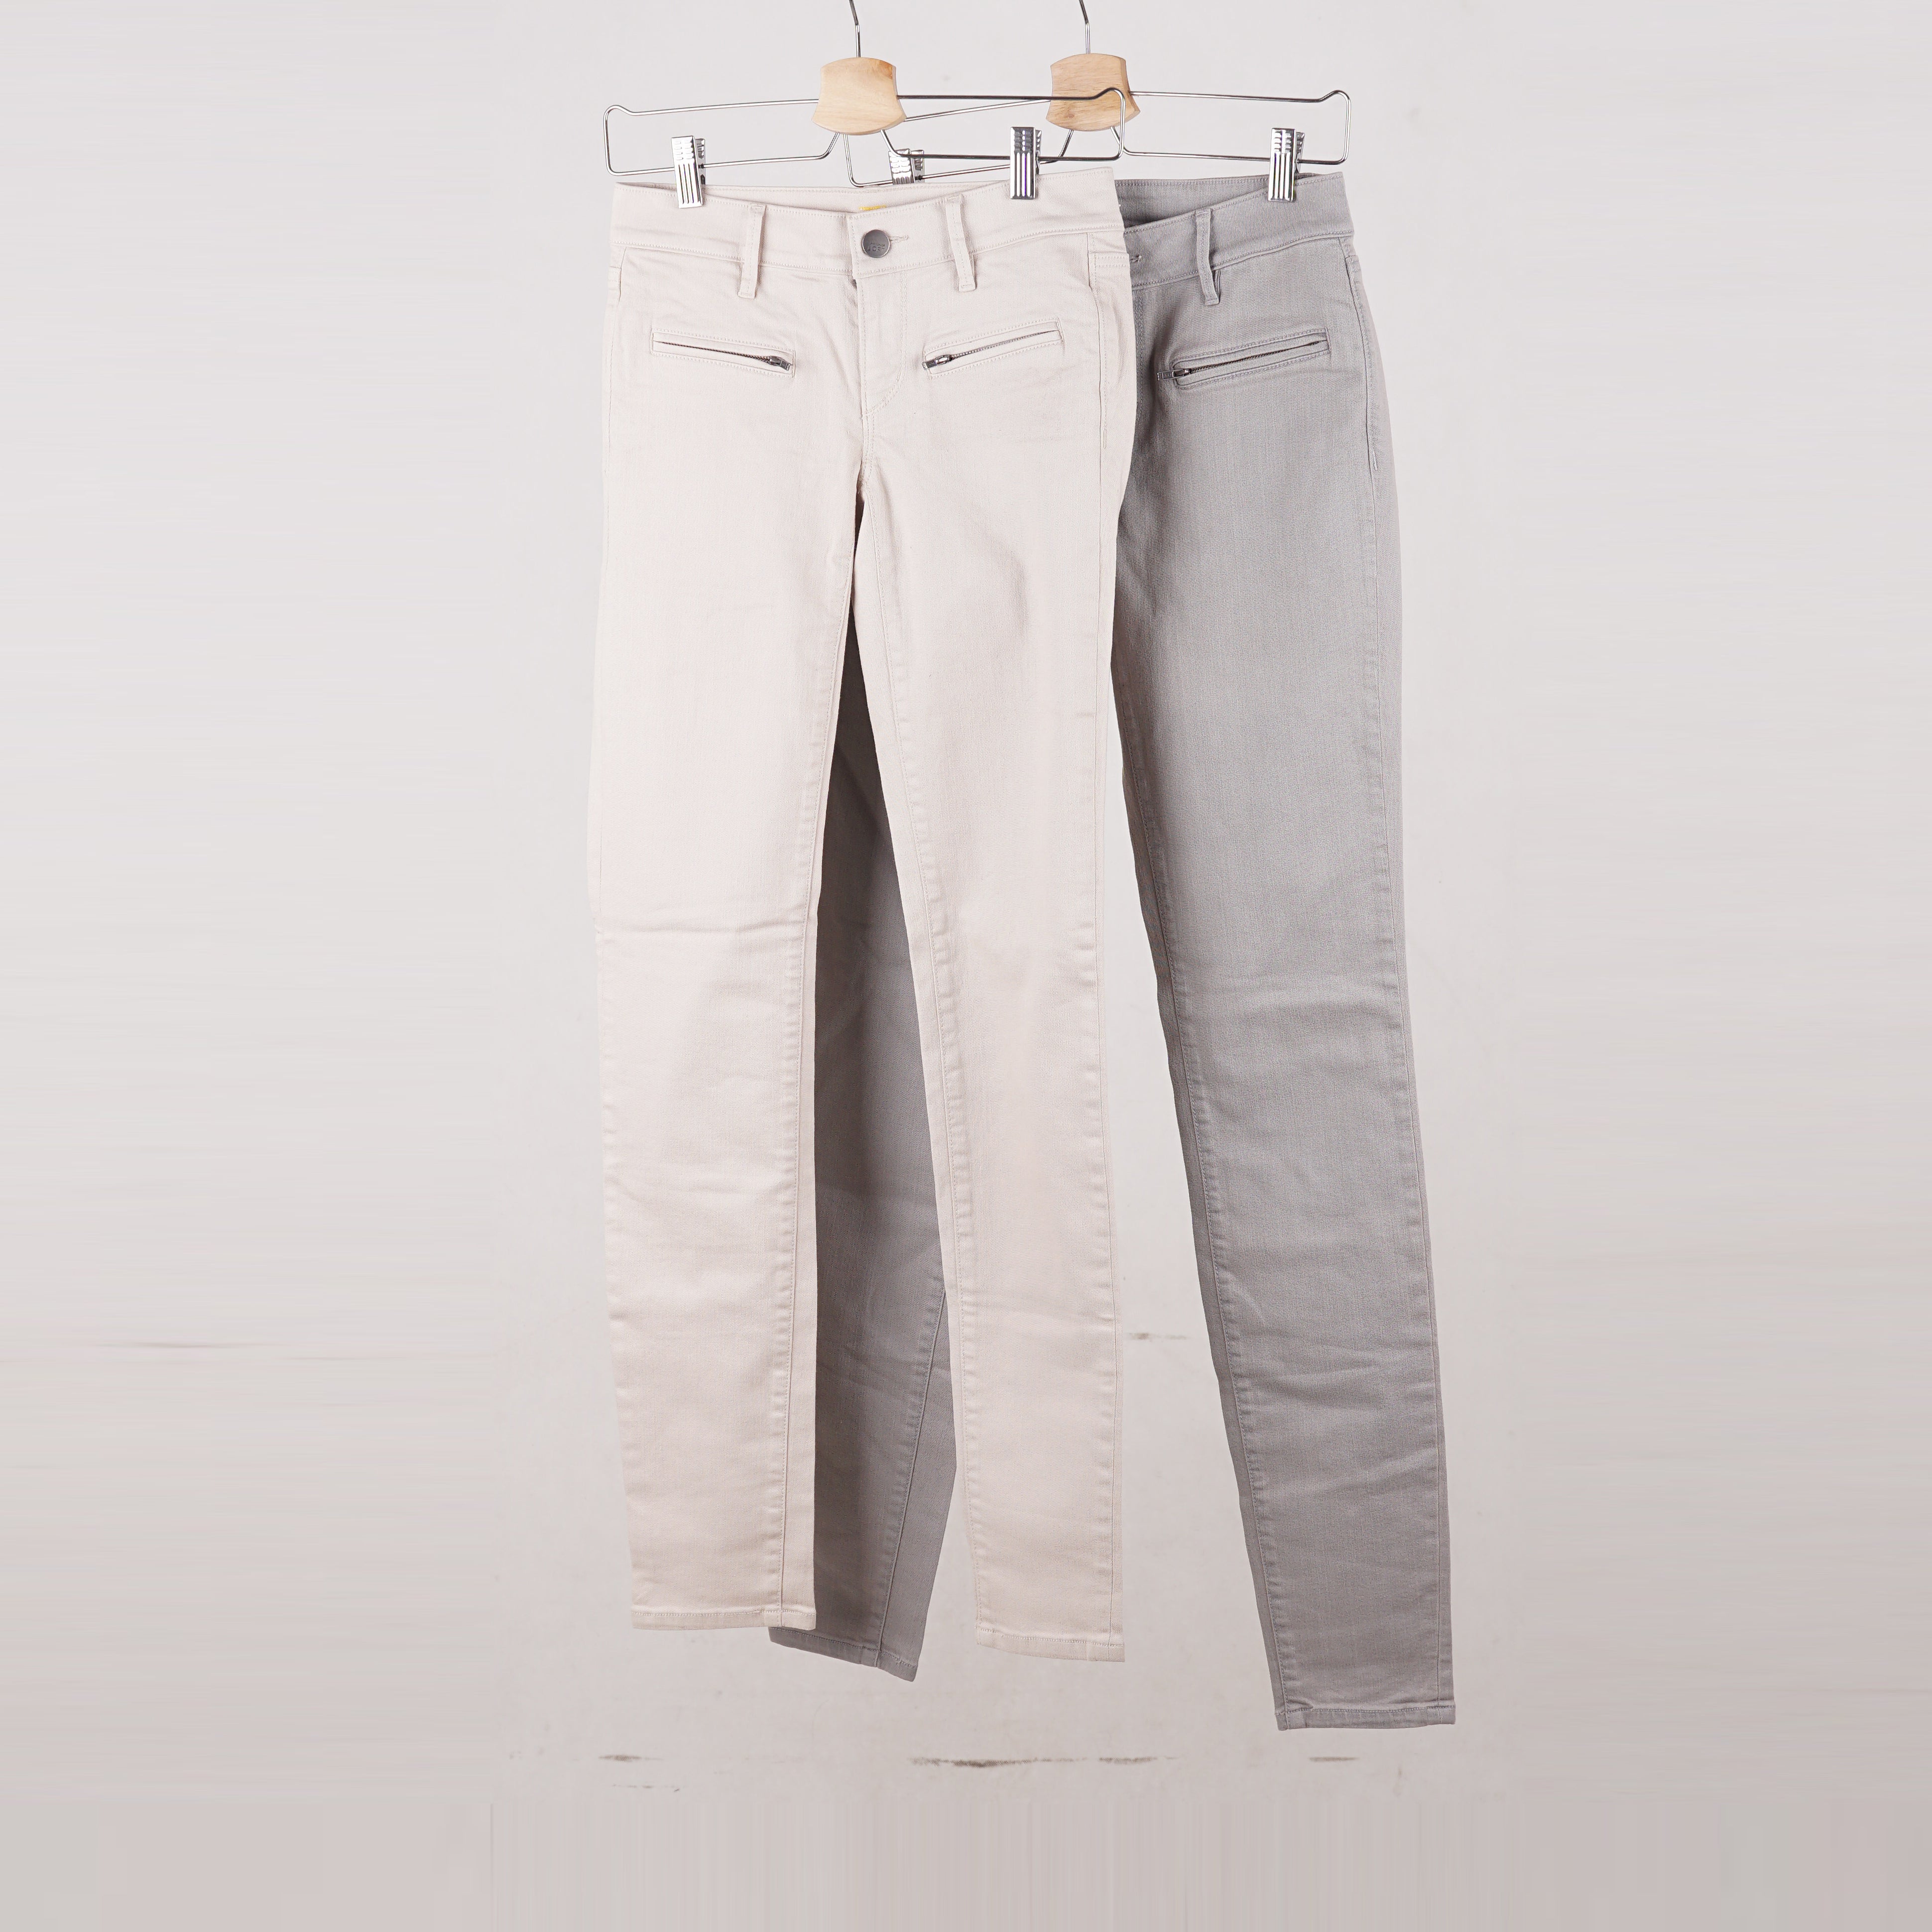 Celana Panjang Wanita - Women Super Skinny Zipper Pocket Jeans Pants (MLL 06)